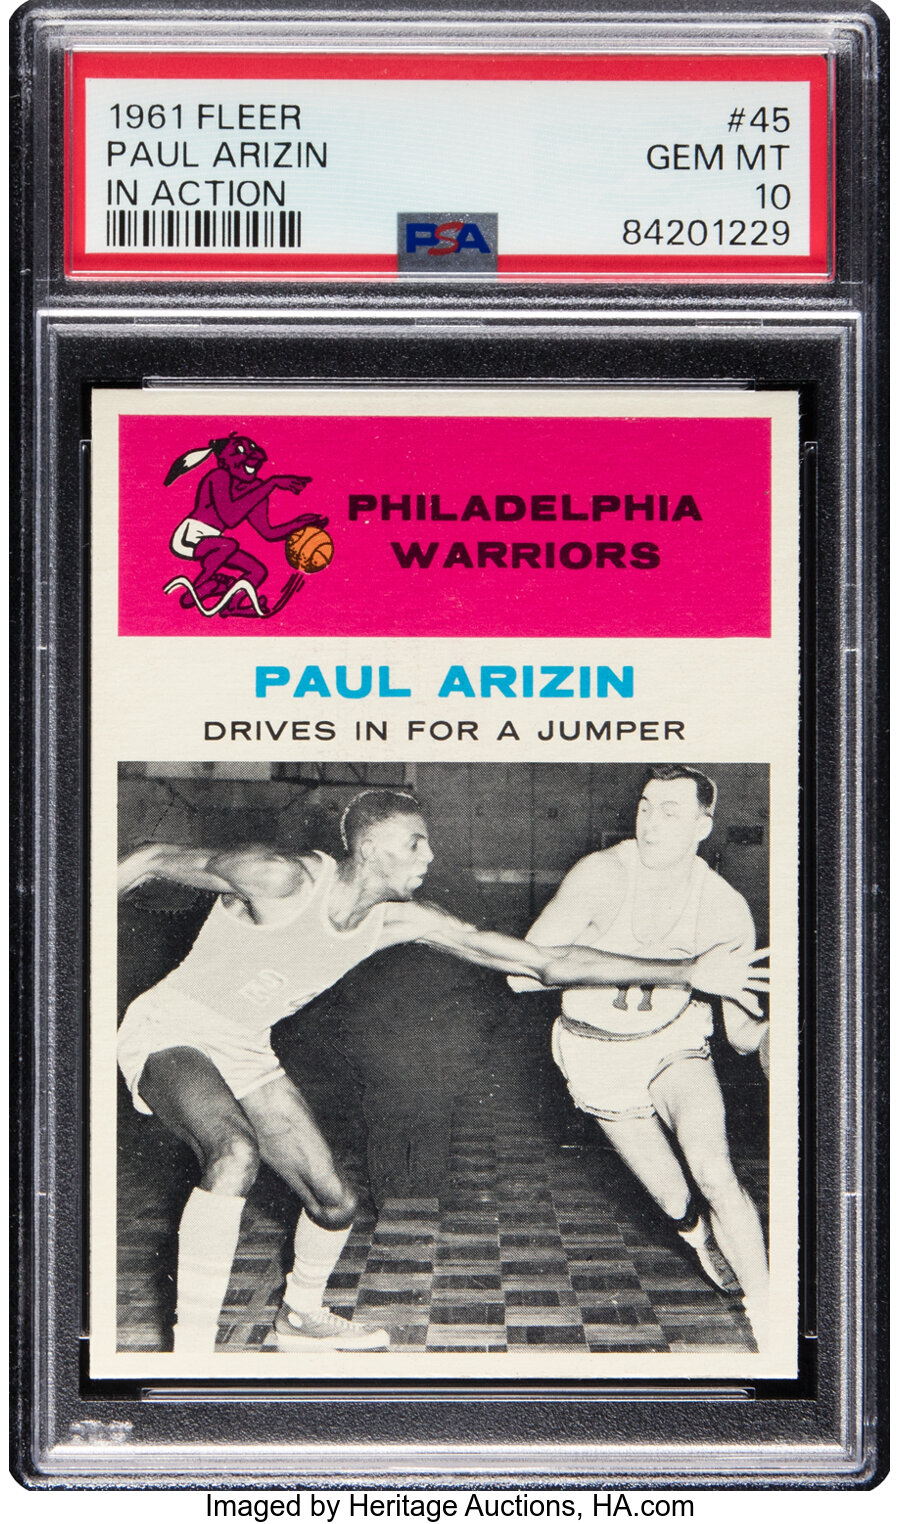 1961 Fleer Paul Arizin (In Action) #45 PSA Gem Mint 10 - The Only Gem Mint 10 Example!